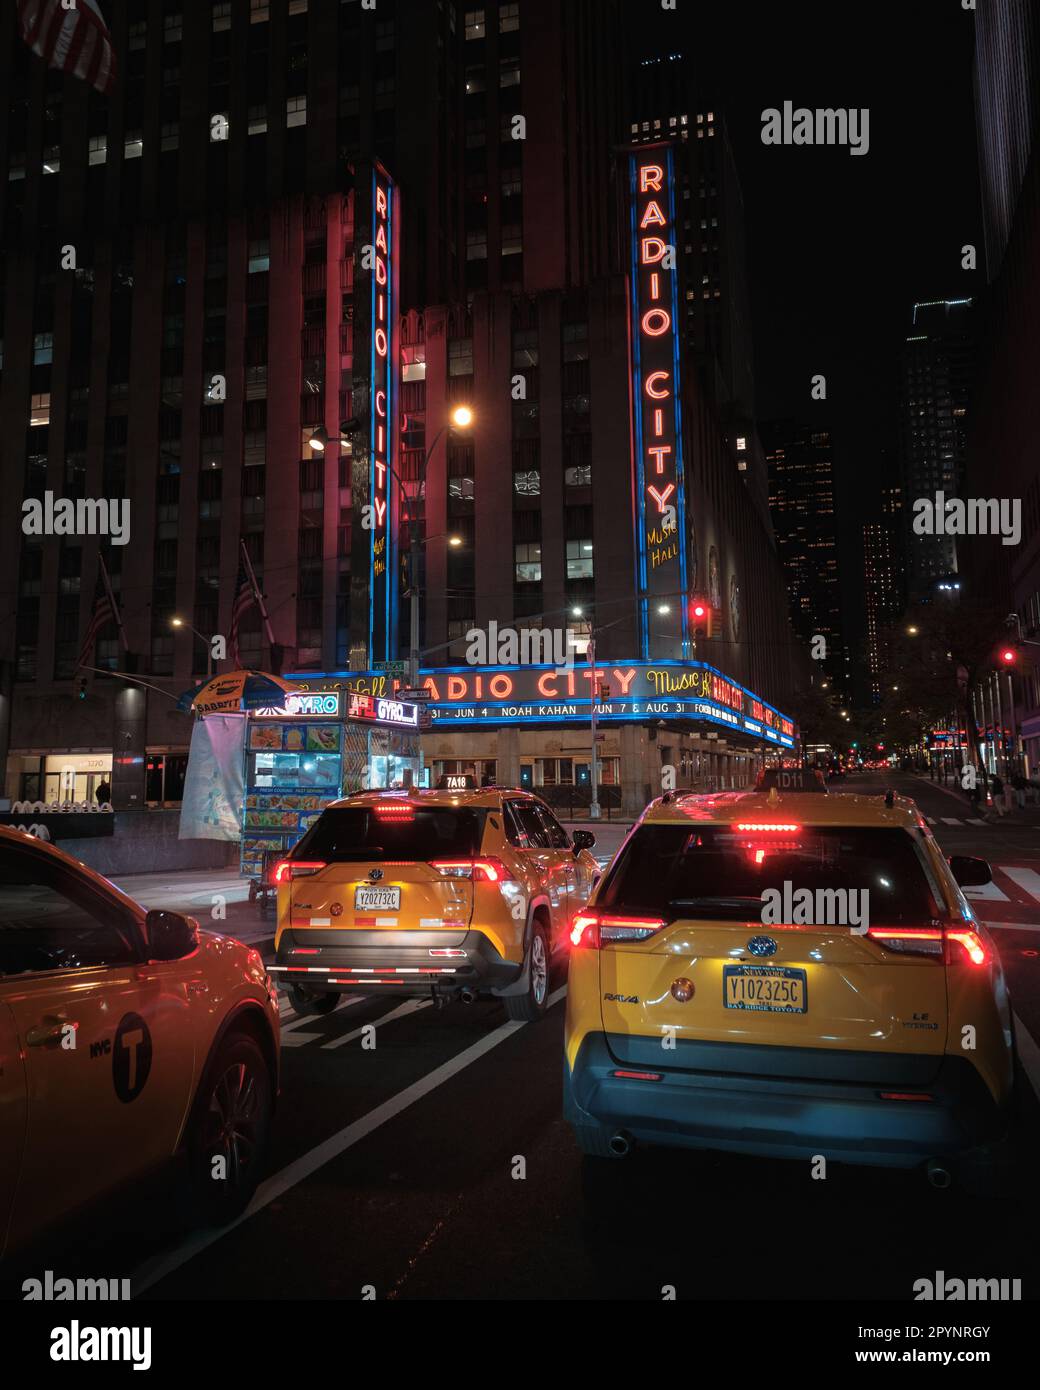 Yellow cabs and Radio City Music Hall neon sign at night, Manhattan, New York Stock Photo